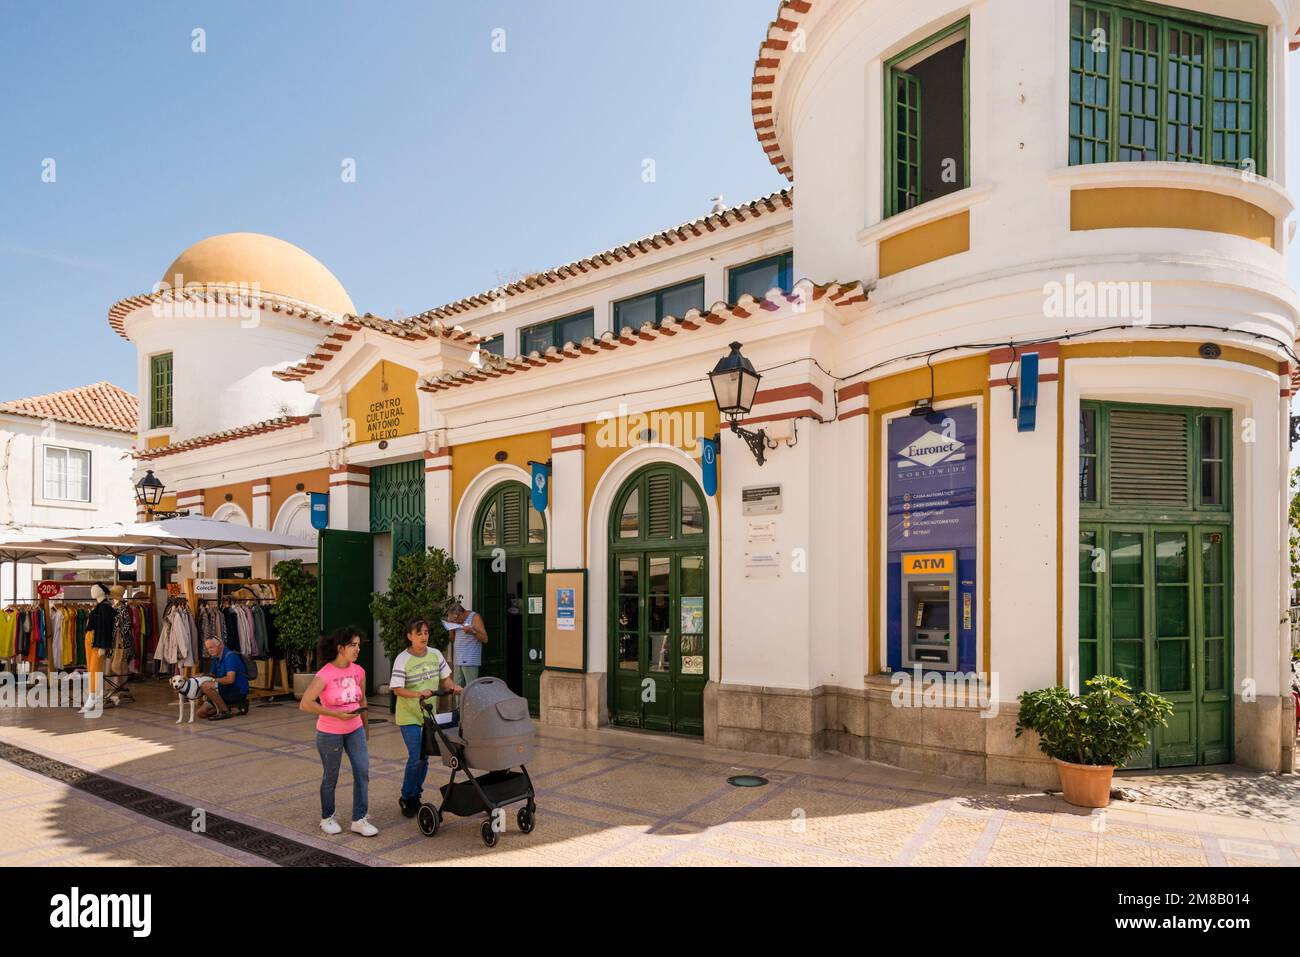 Pedestrianised street lined with shops, Vila Real de Santo Antonio, Algarve, Portugal Stock Photo